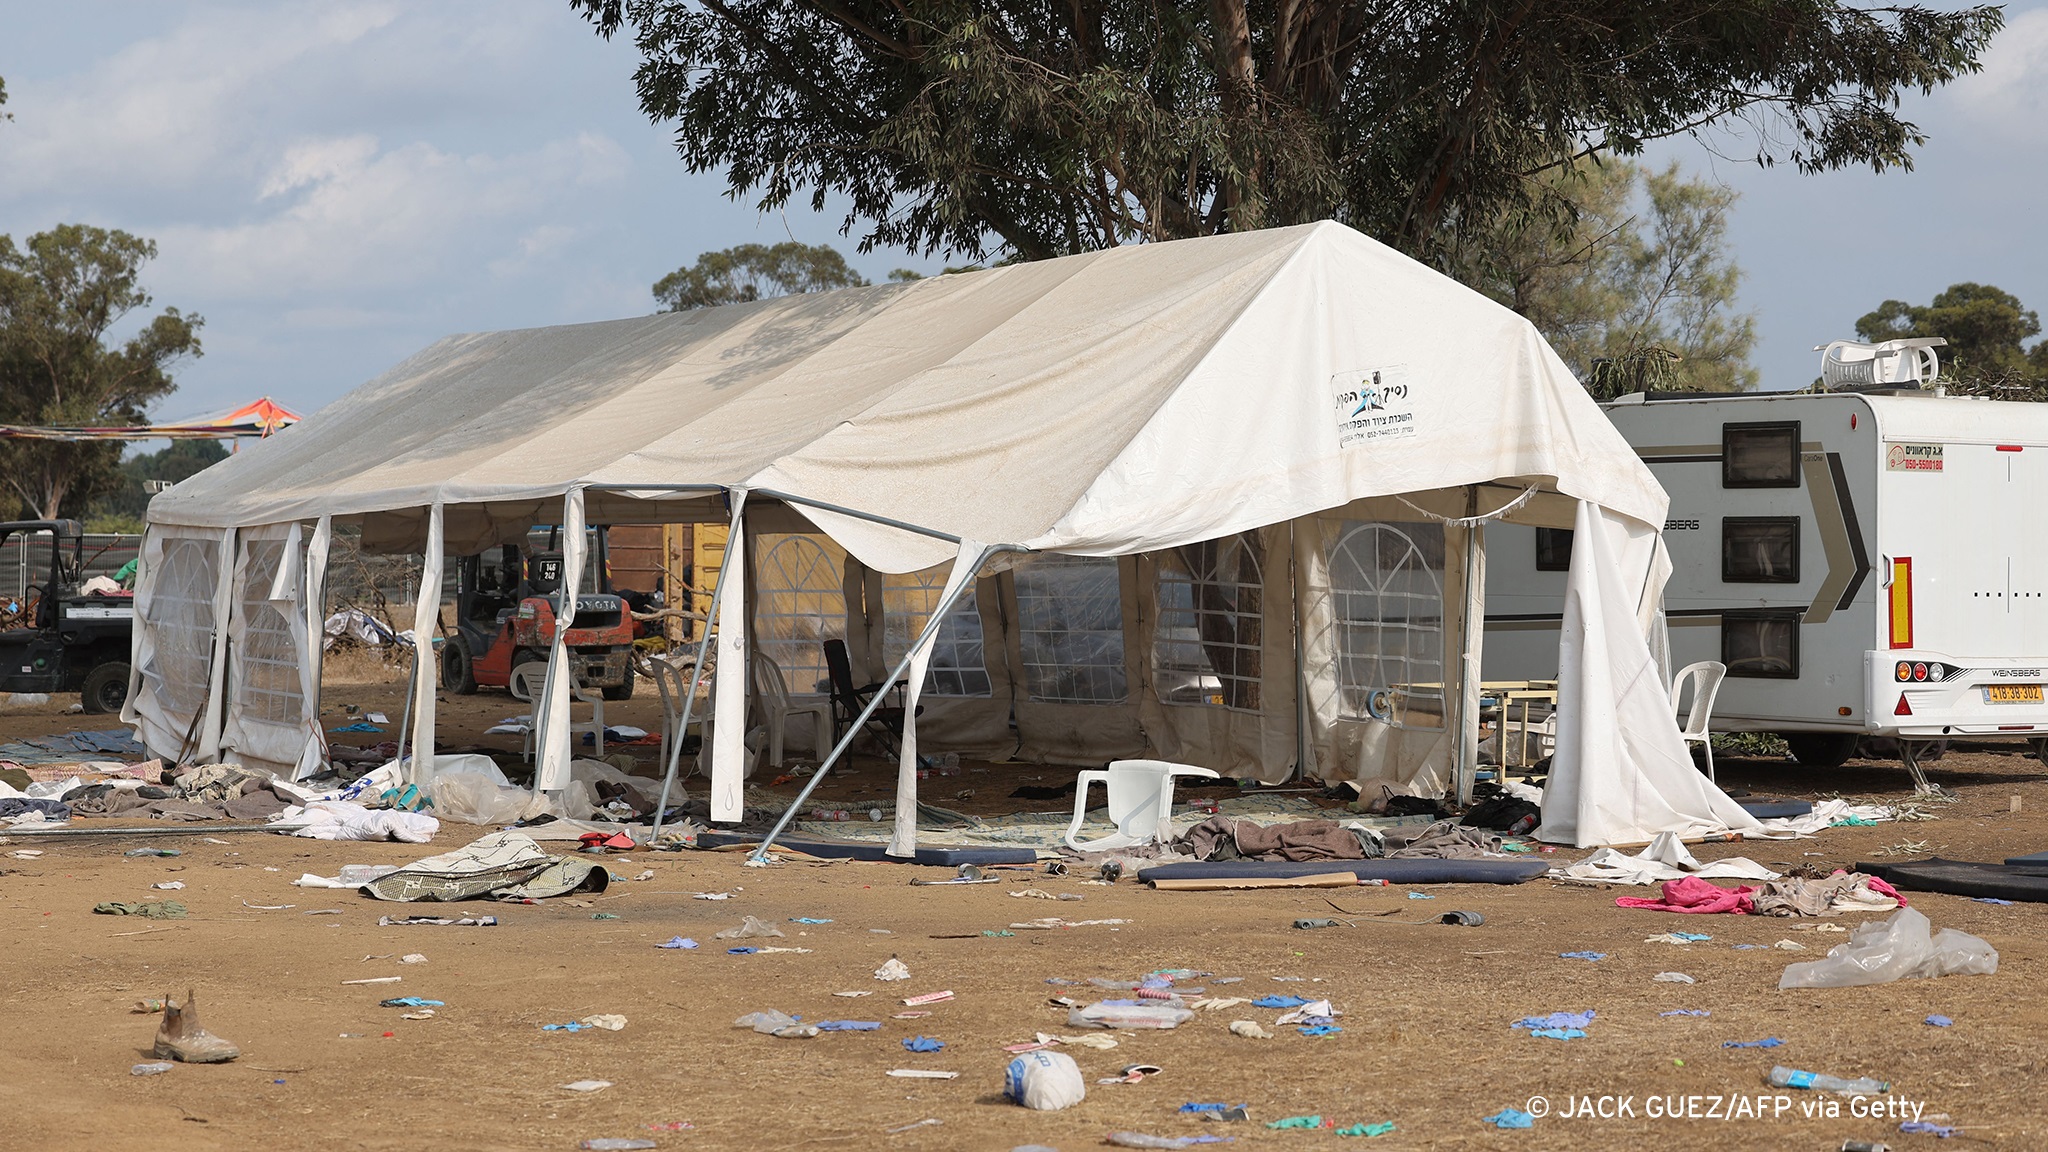 Massacre at a music festival: At the Supernova Festival near Kibbutz Re'im, up to 270 visitors were killed, according to estimates so far (image: private)